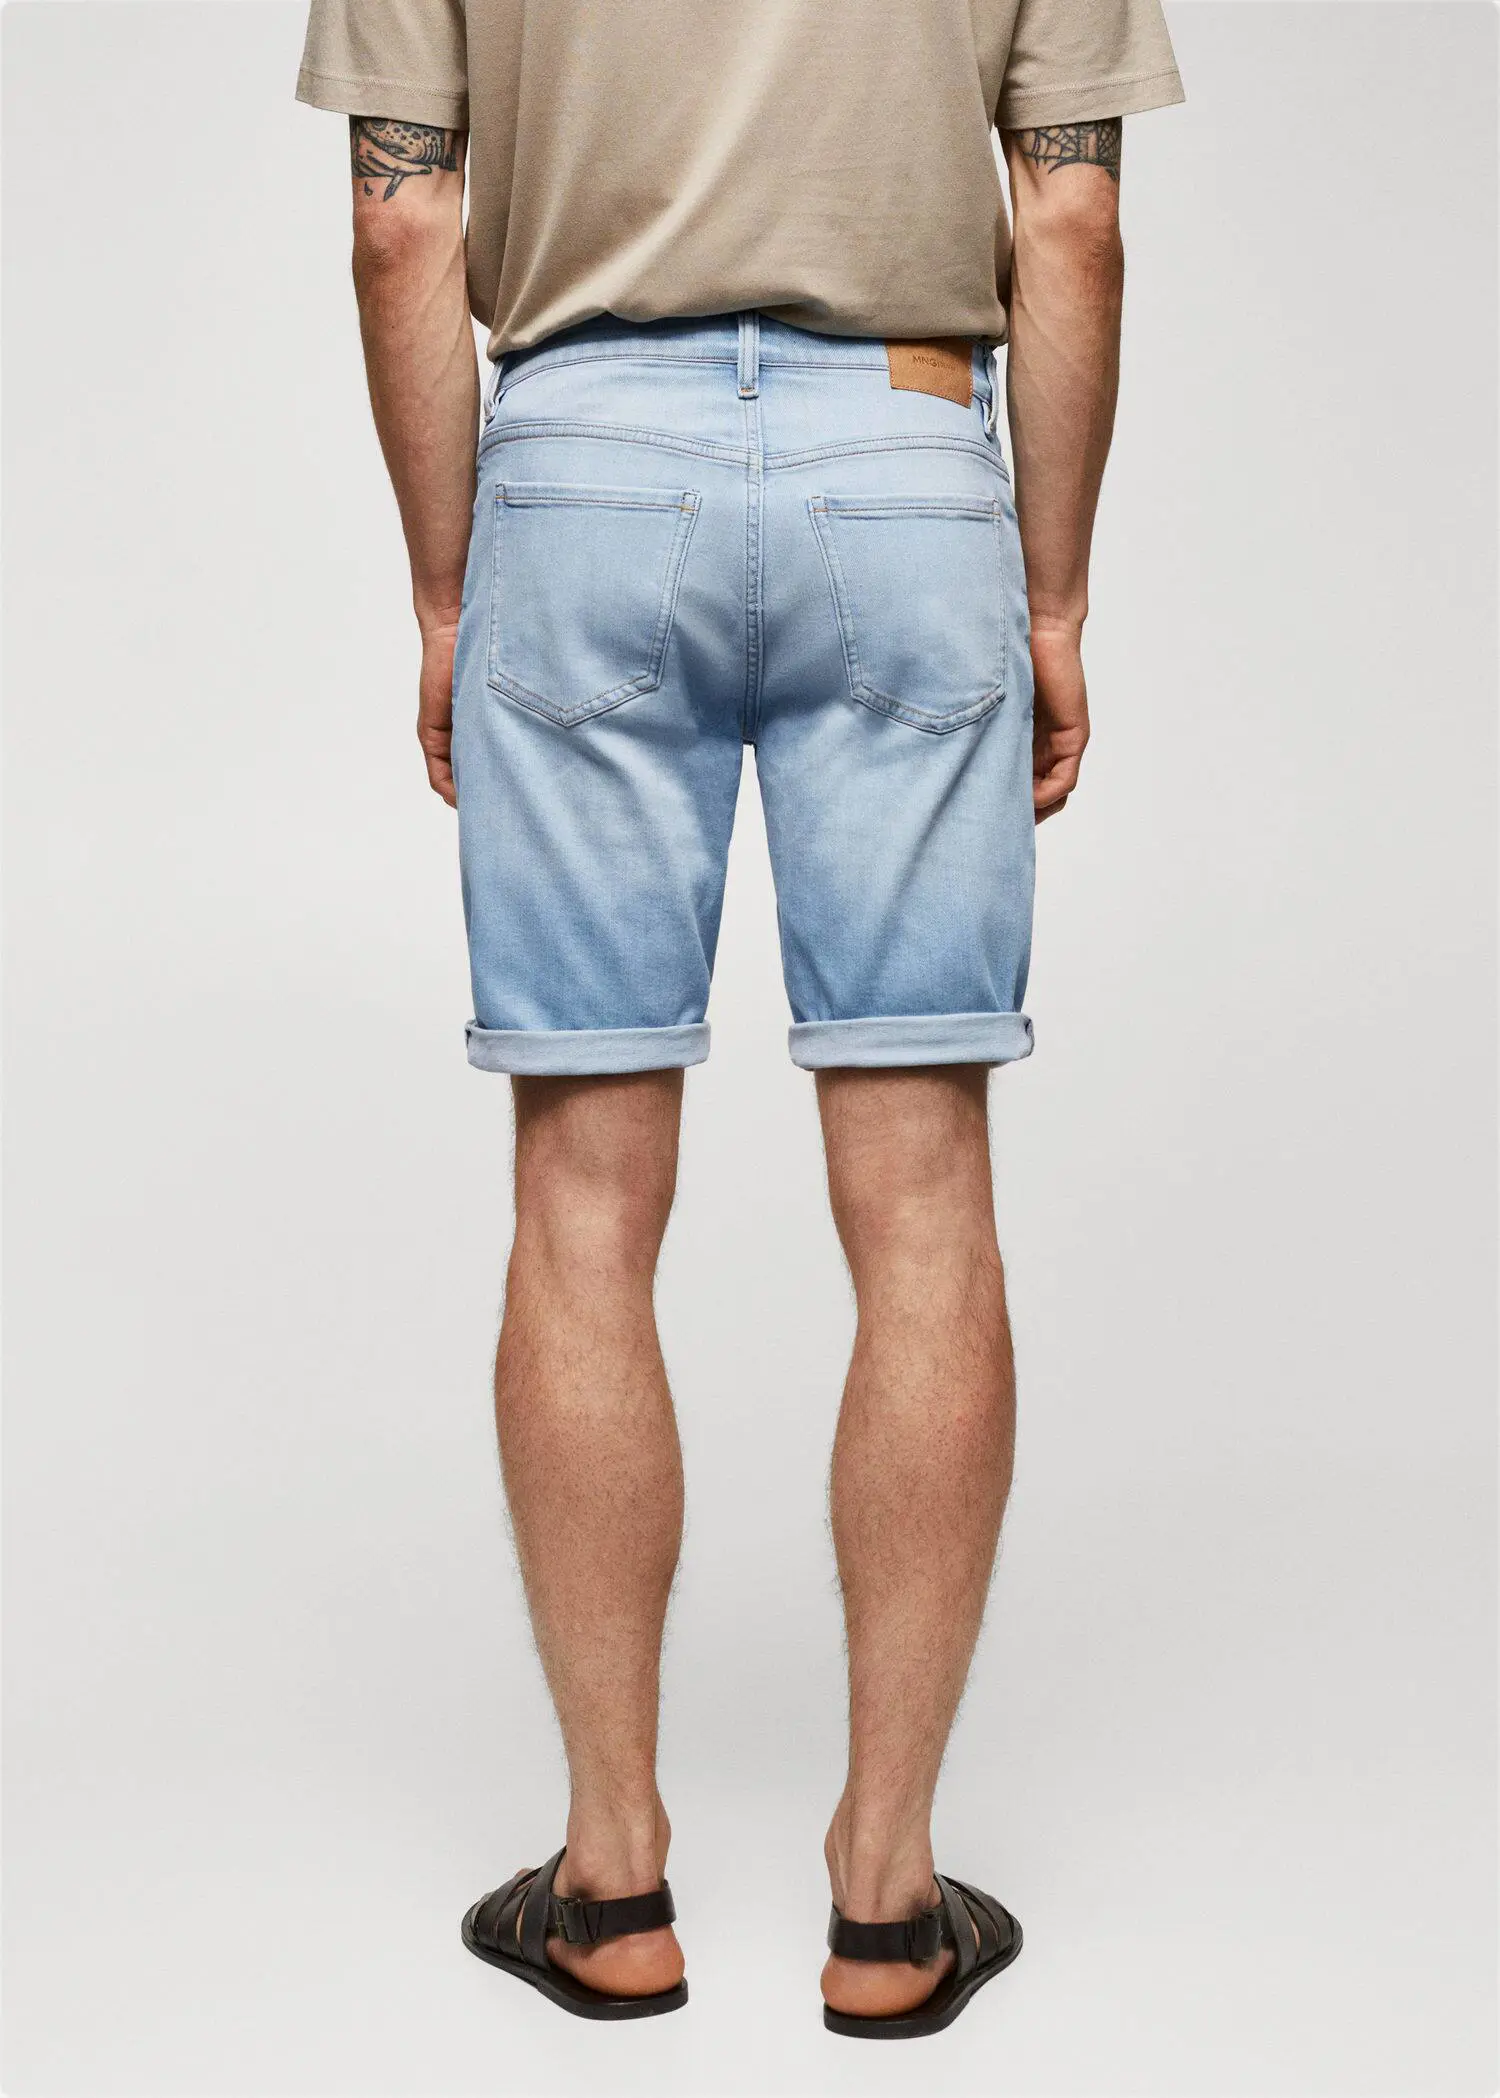 Mango Slim-fit denim bermuda shorts. a man wearing light blue shorts and a white shirt. 